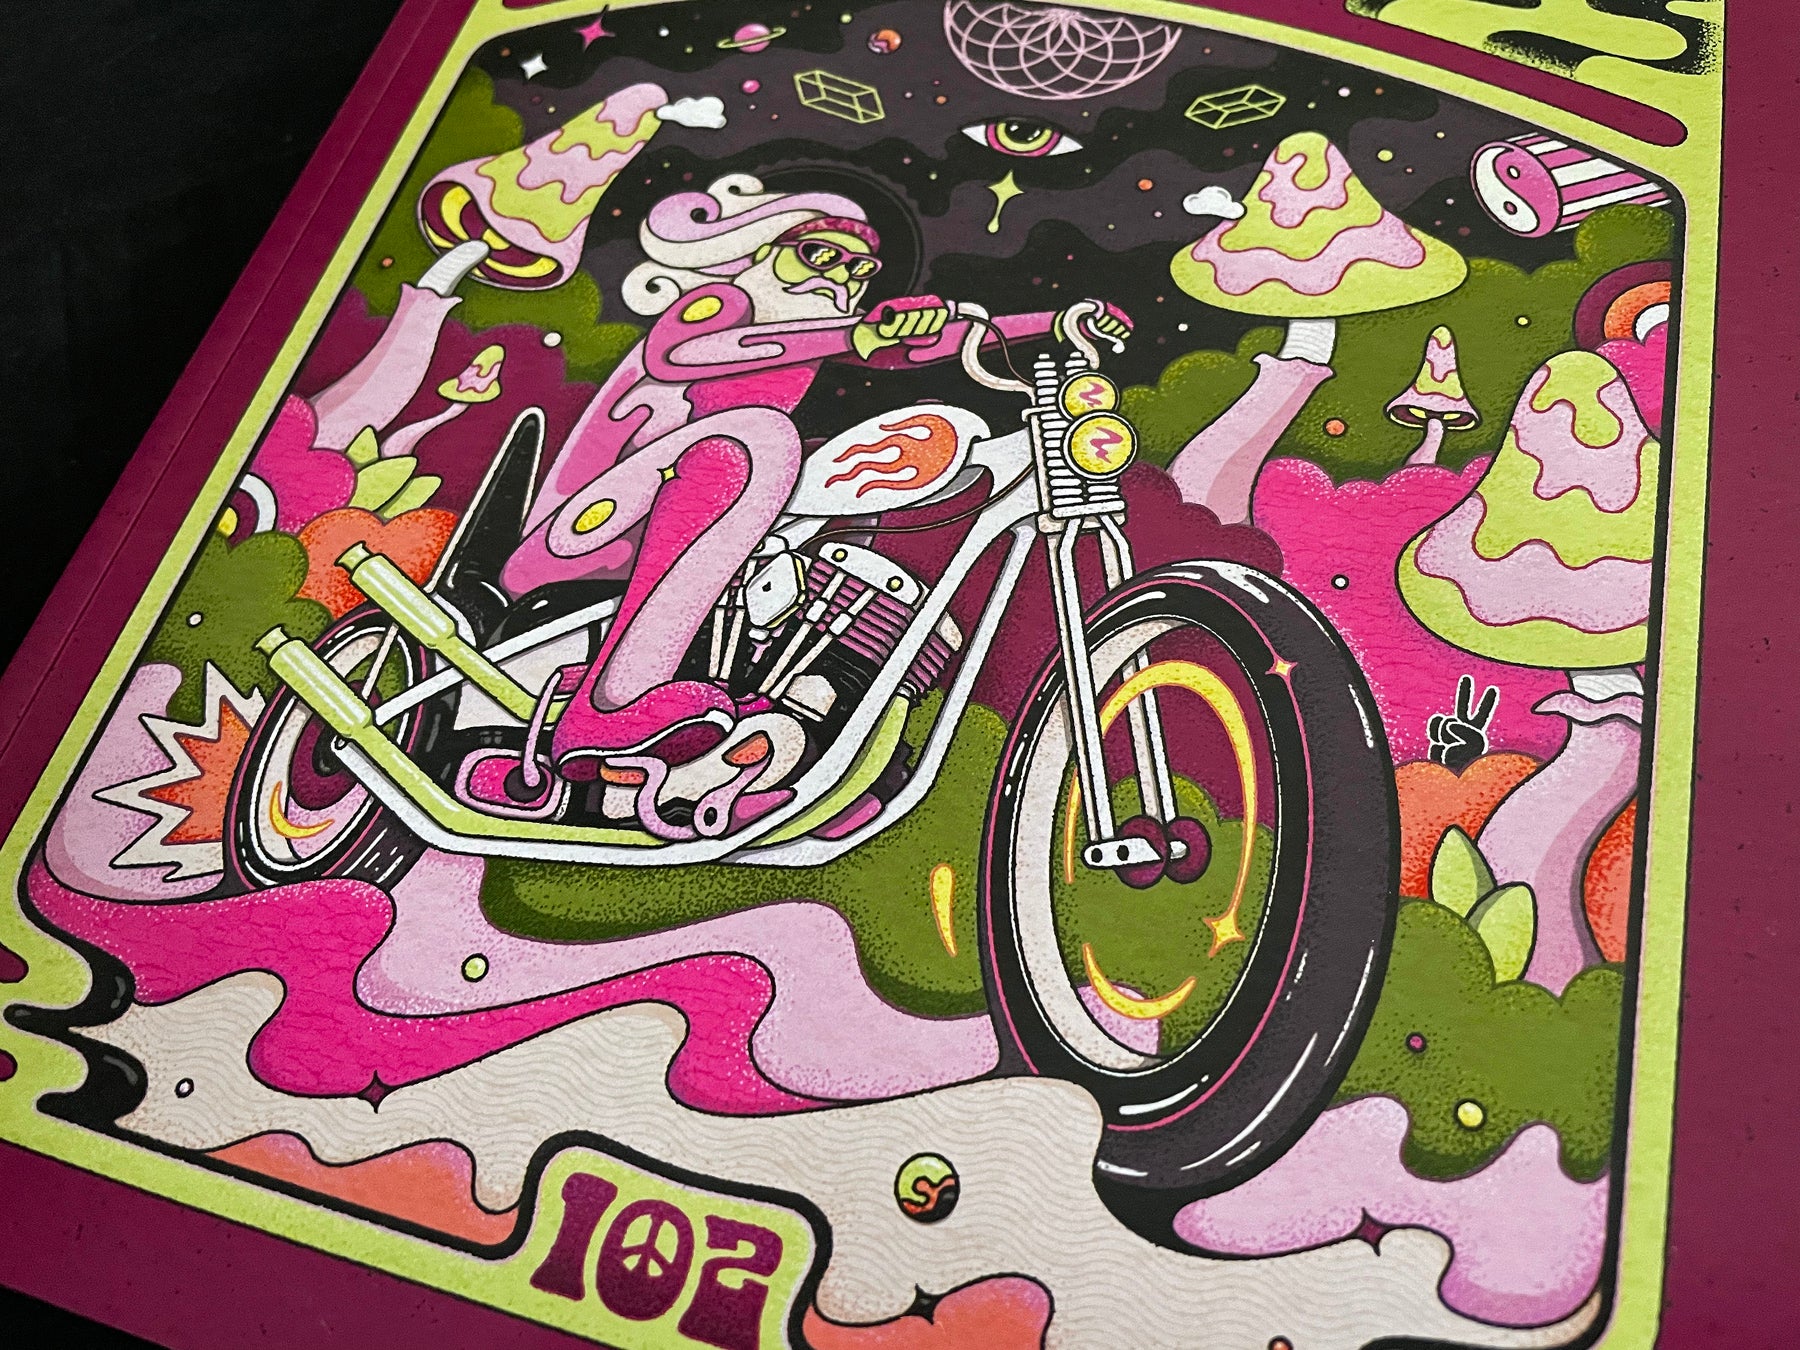 Dice magazine 102 cover illustration Kurt Diserio psychedelic motorcycle chopper art